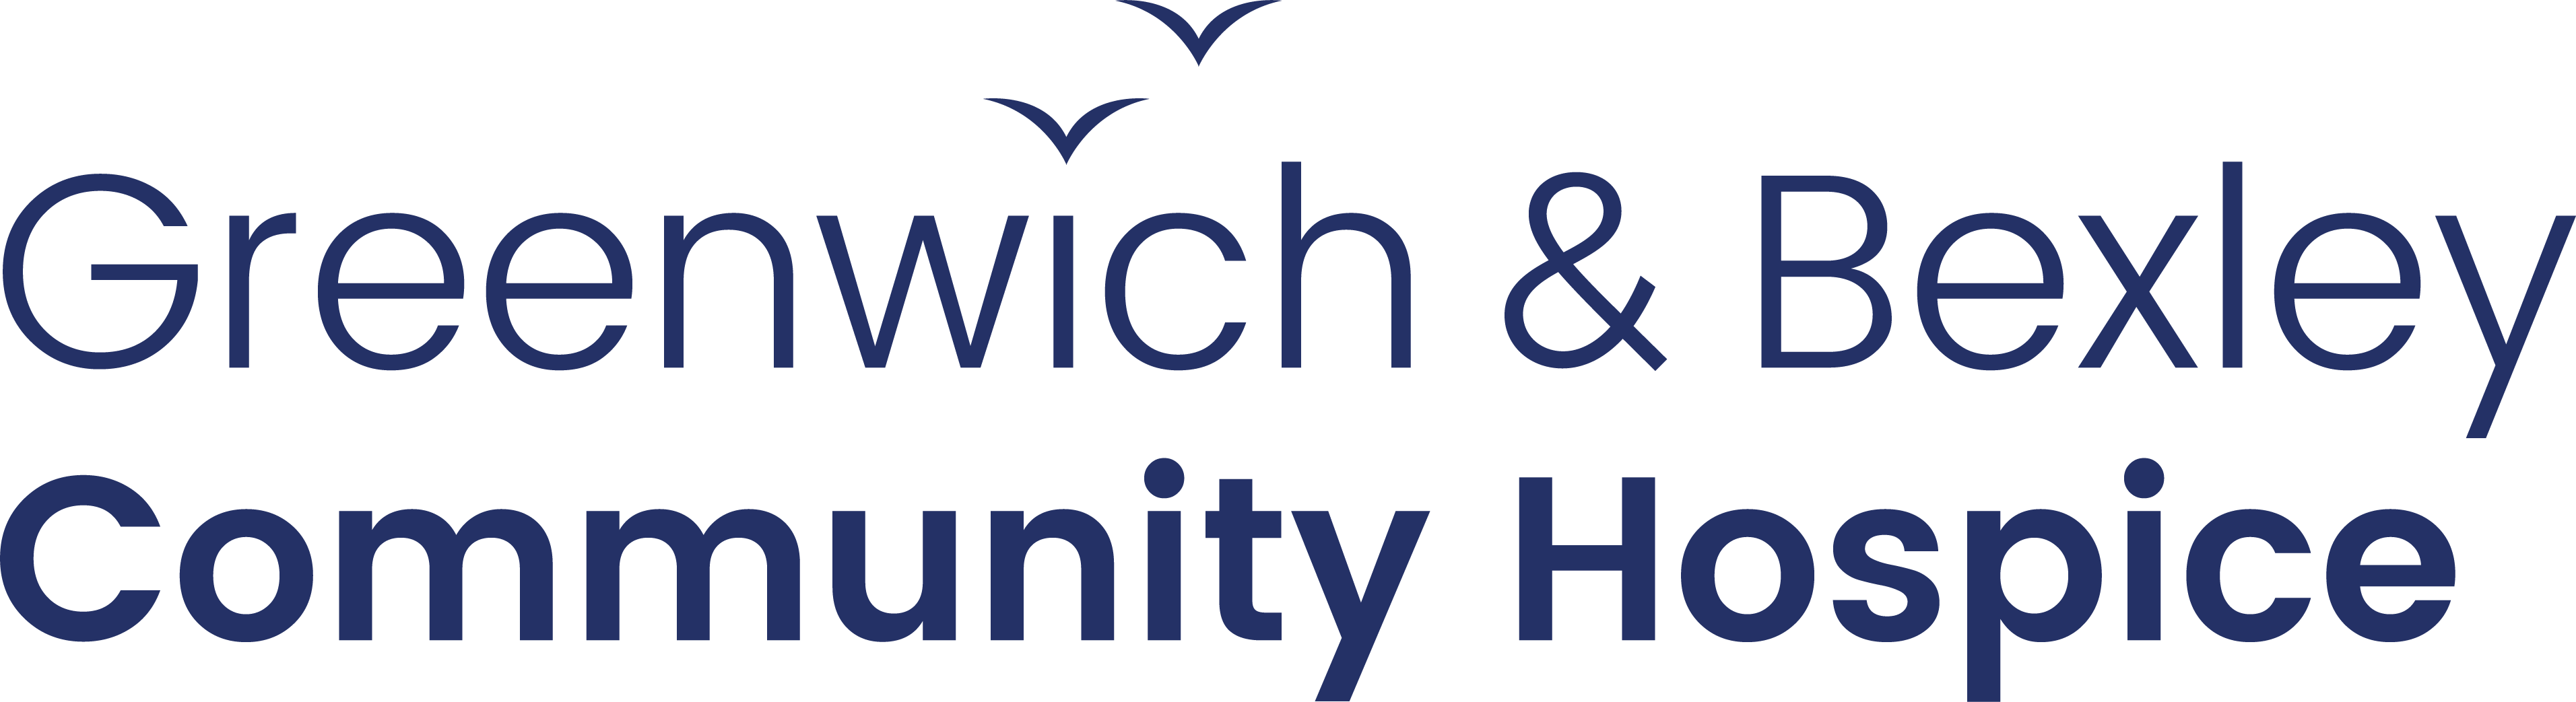 logo for Greenwich & Bexley Community Hospice